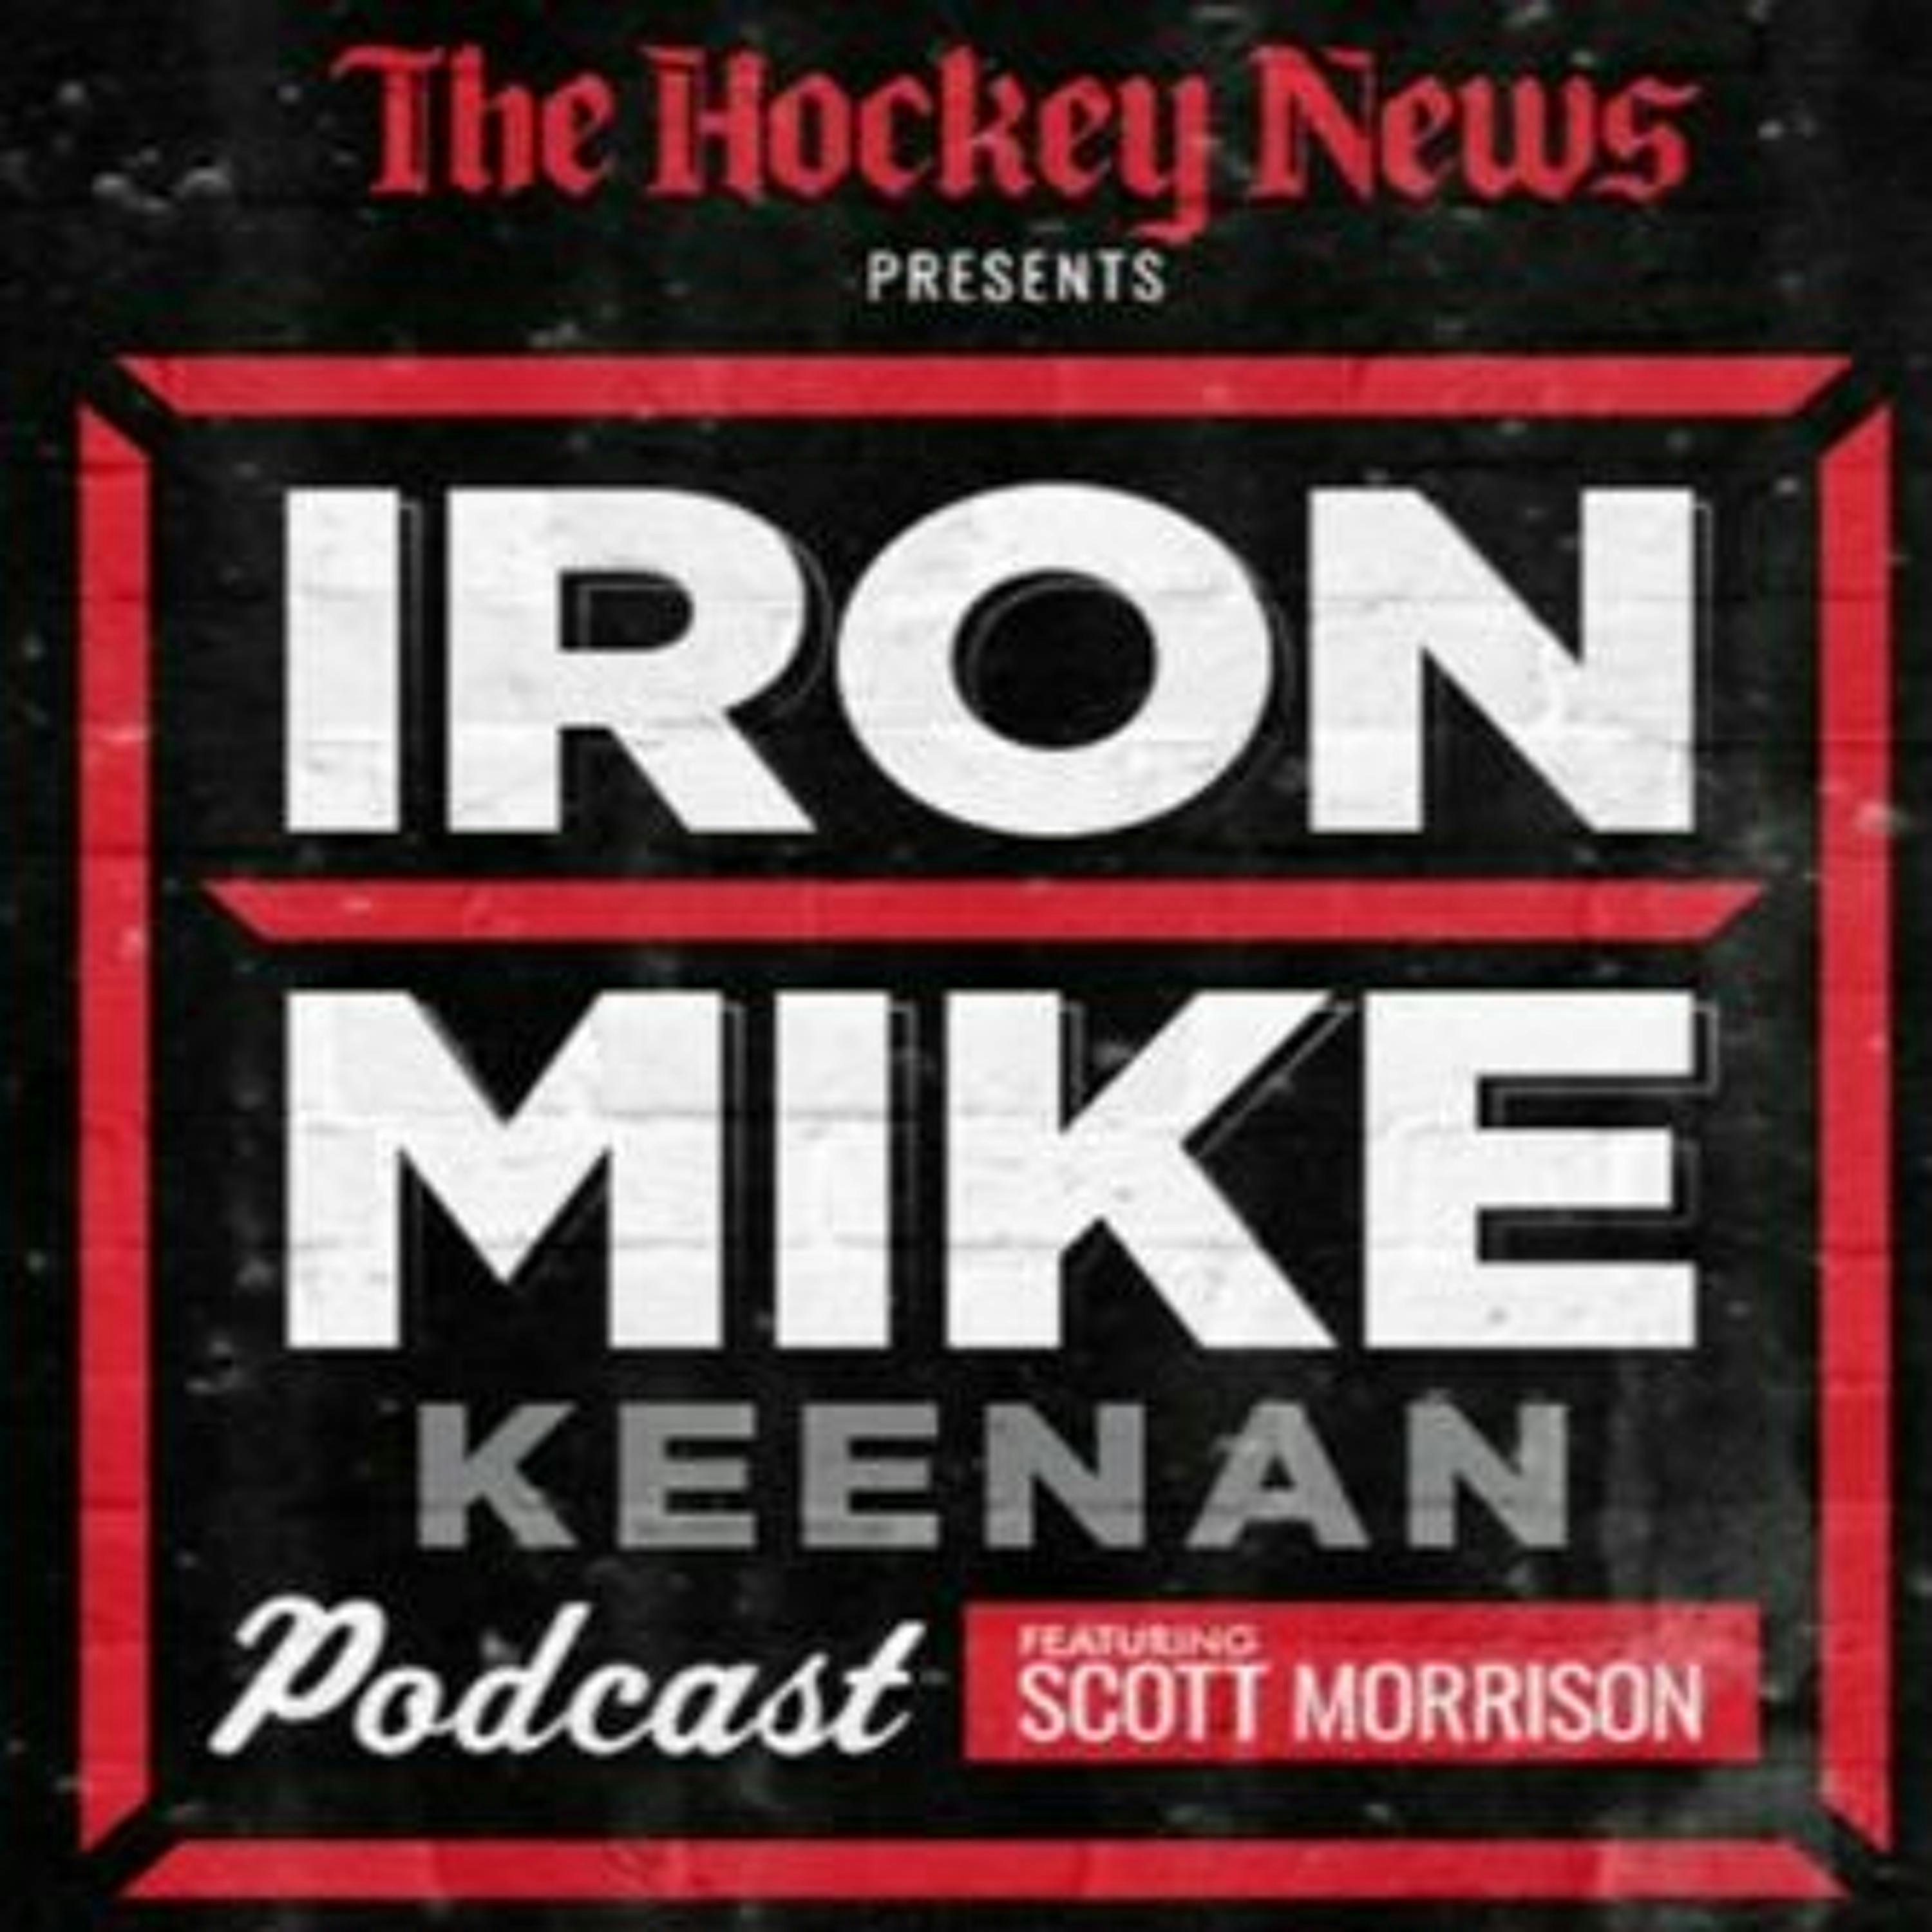 Iron Mike Keenan Podcast: Episode 18 –  Coaching Hockey’s Tough Guys